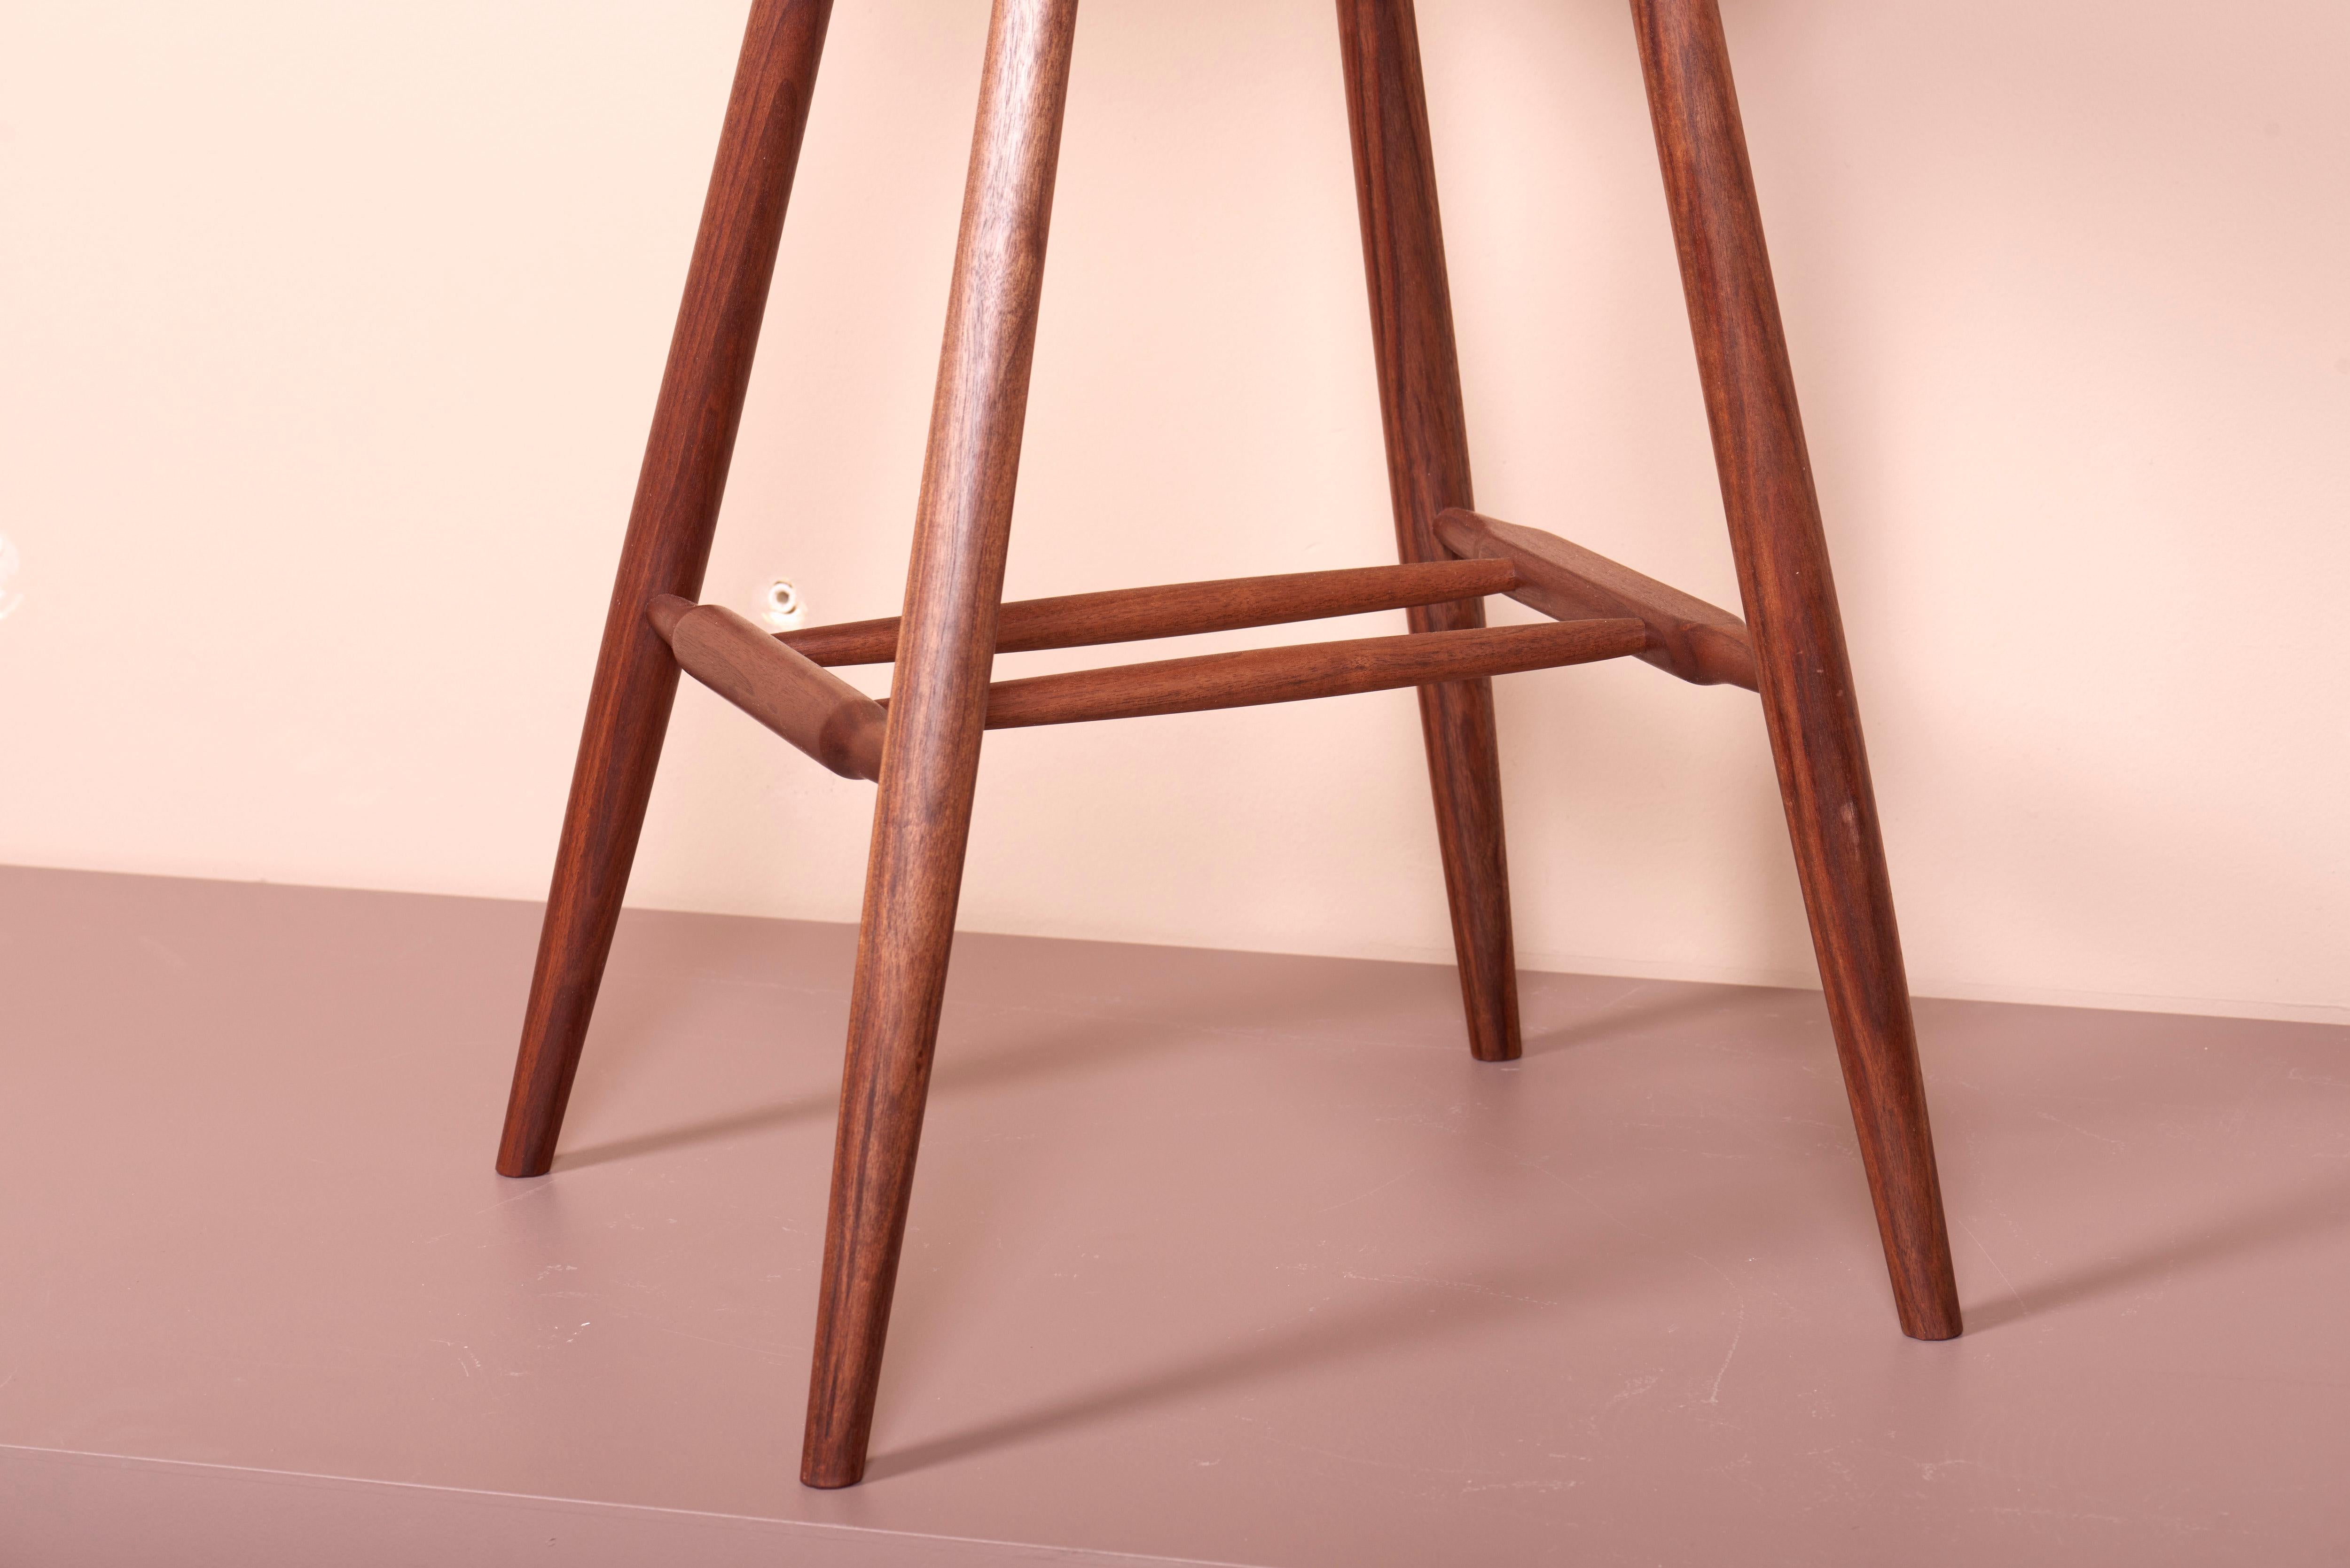 Four Mira Nakashima 4-Legged High Chairs based on a design by George Nakashima For Sale 8